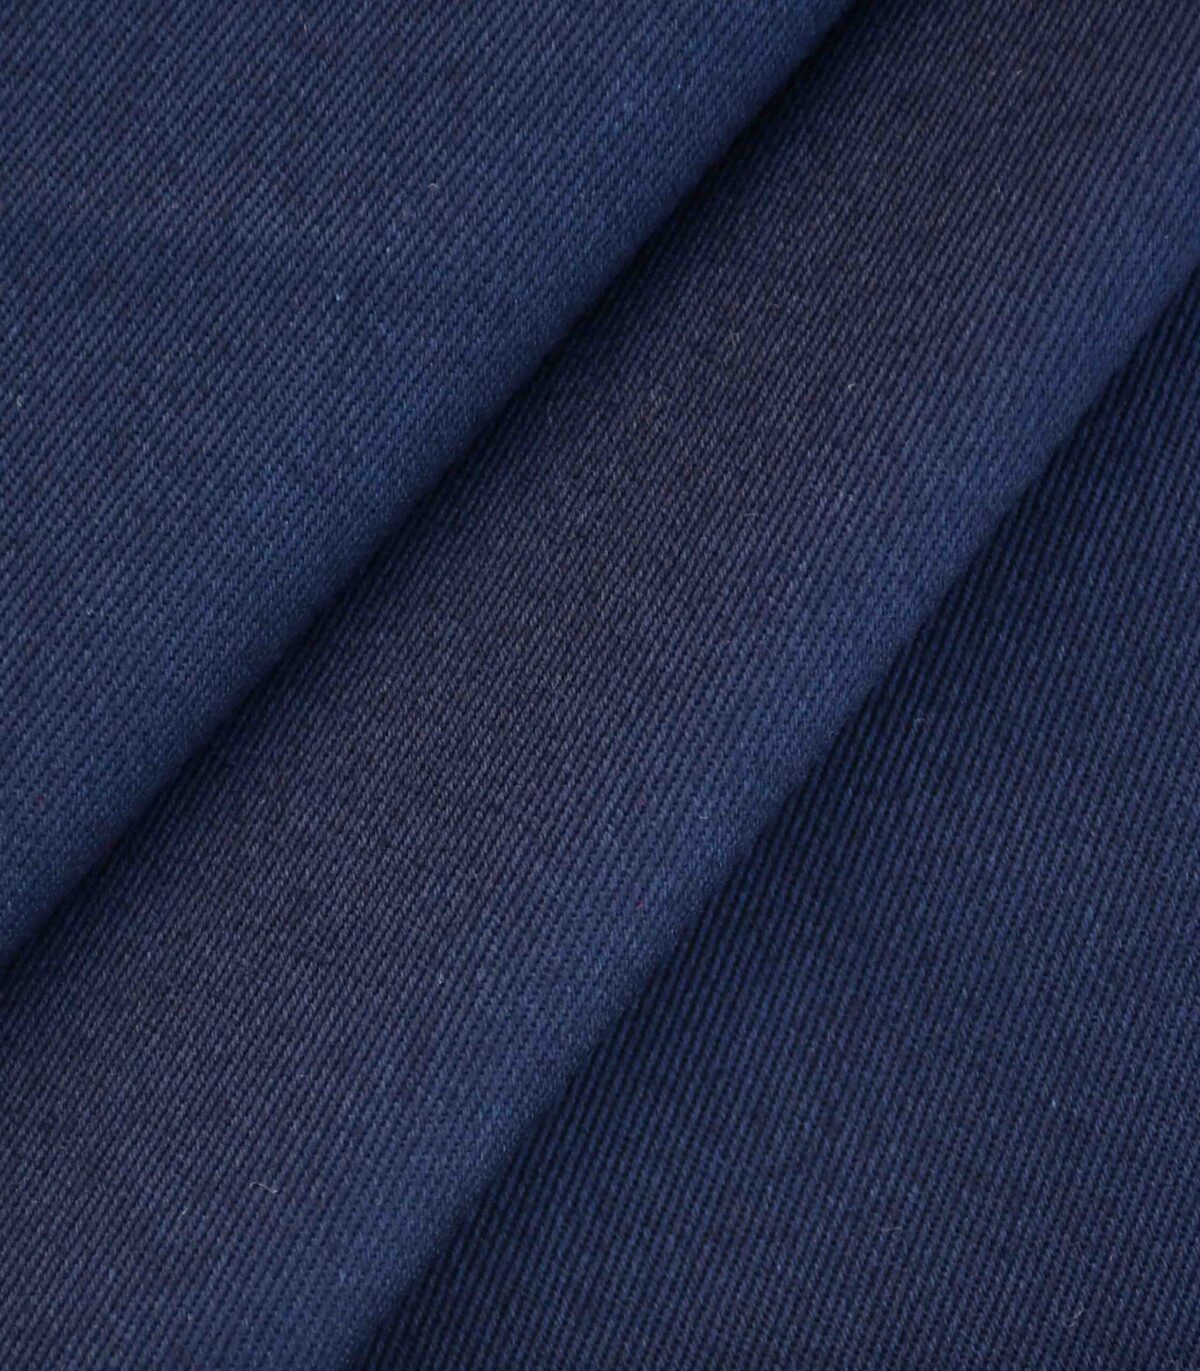 Cotton Dark Navy Dyed Woven Fabric